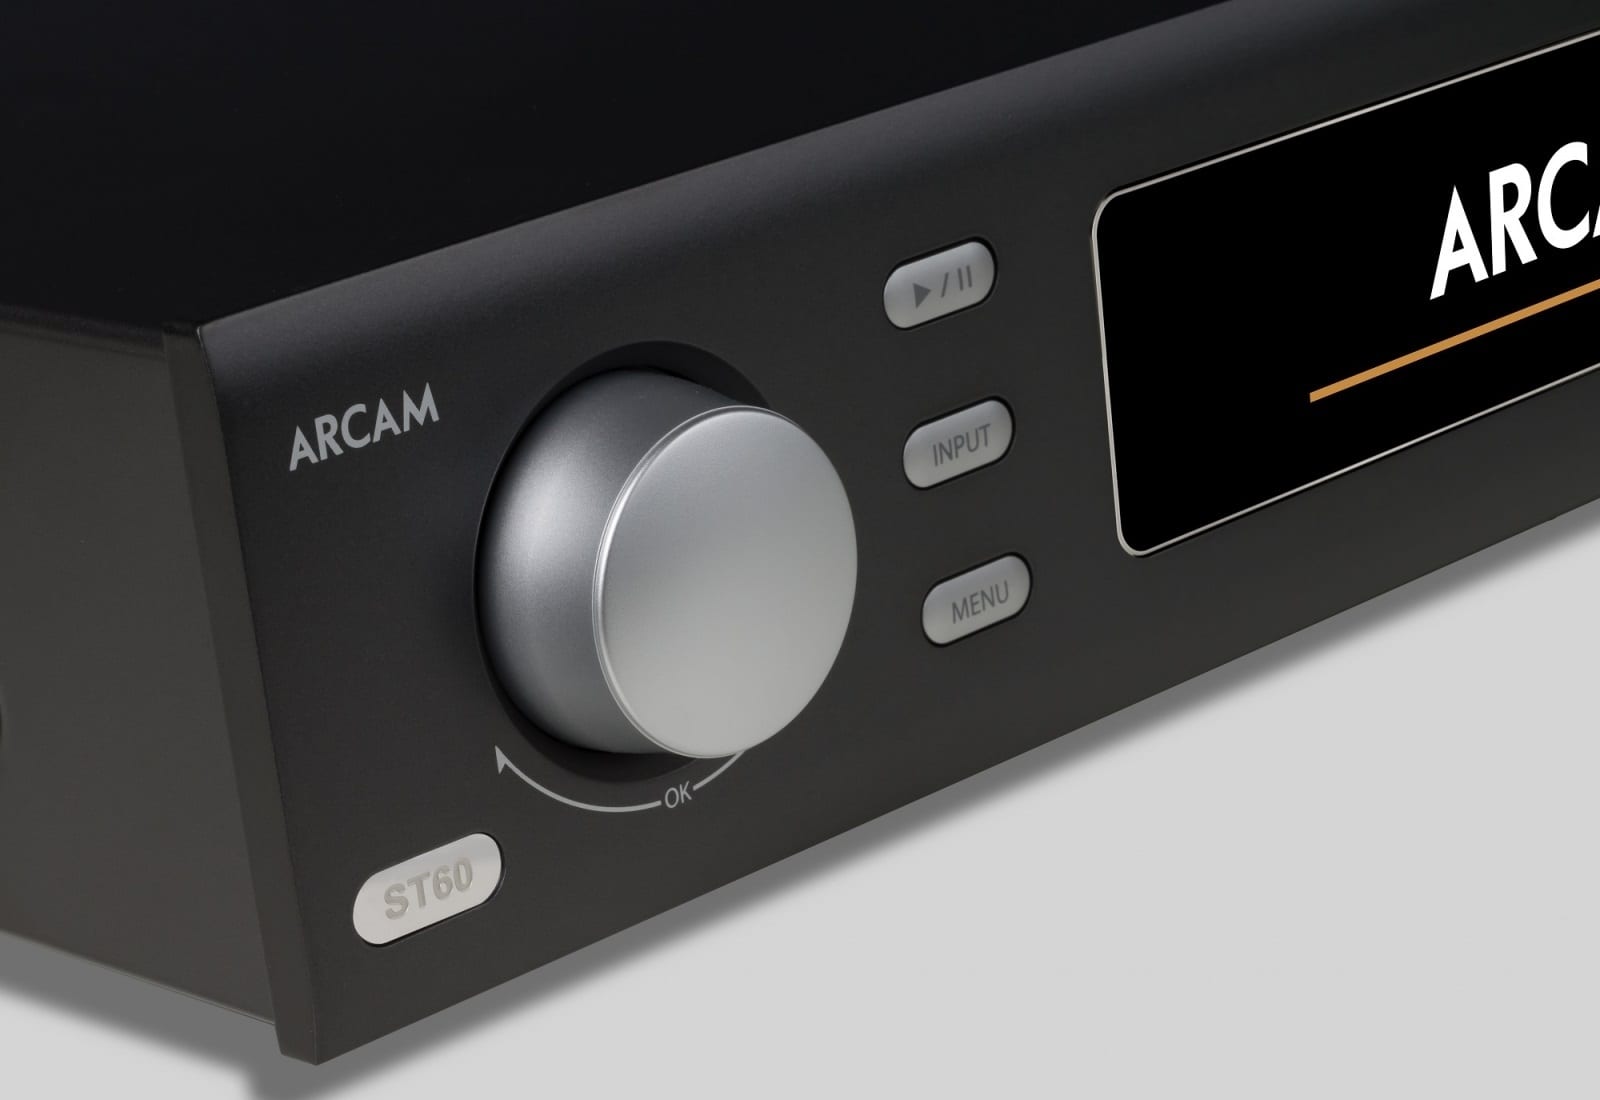 Arcam ST60 - Audio streamer